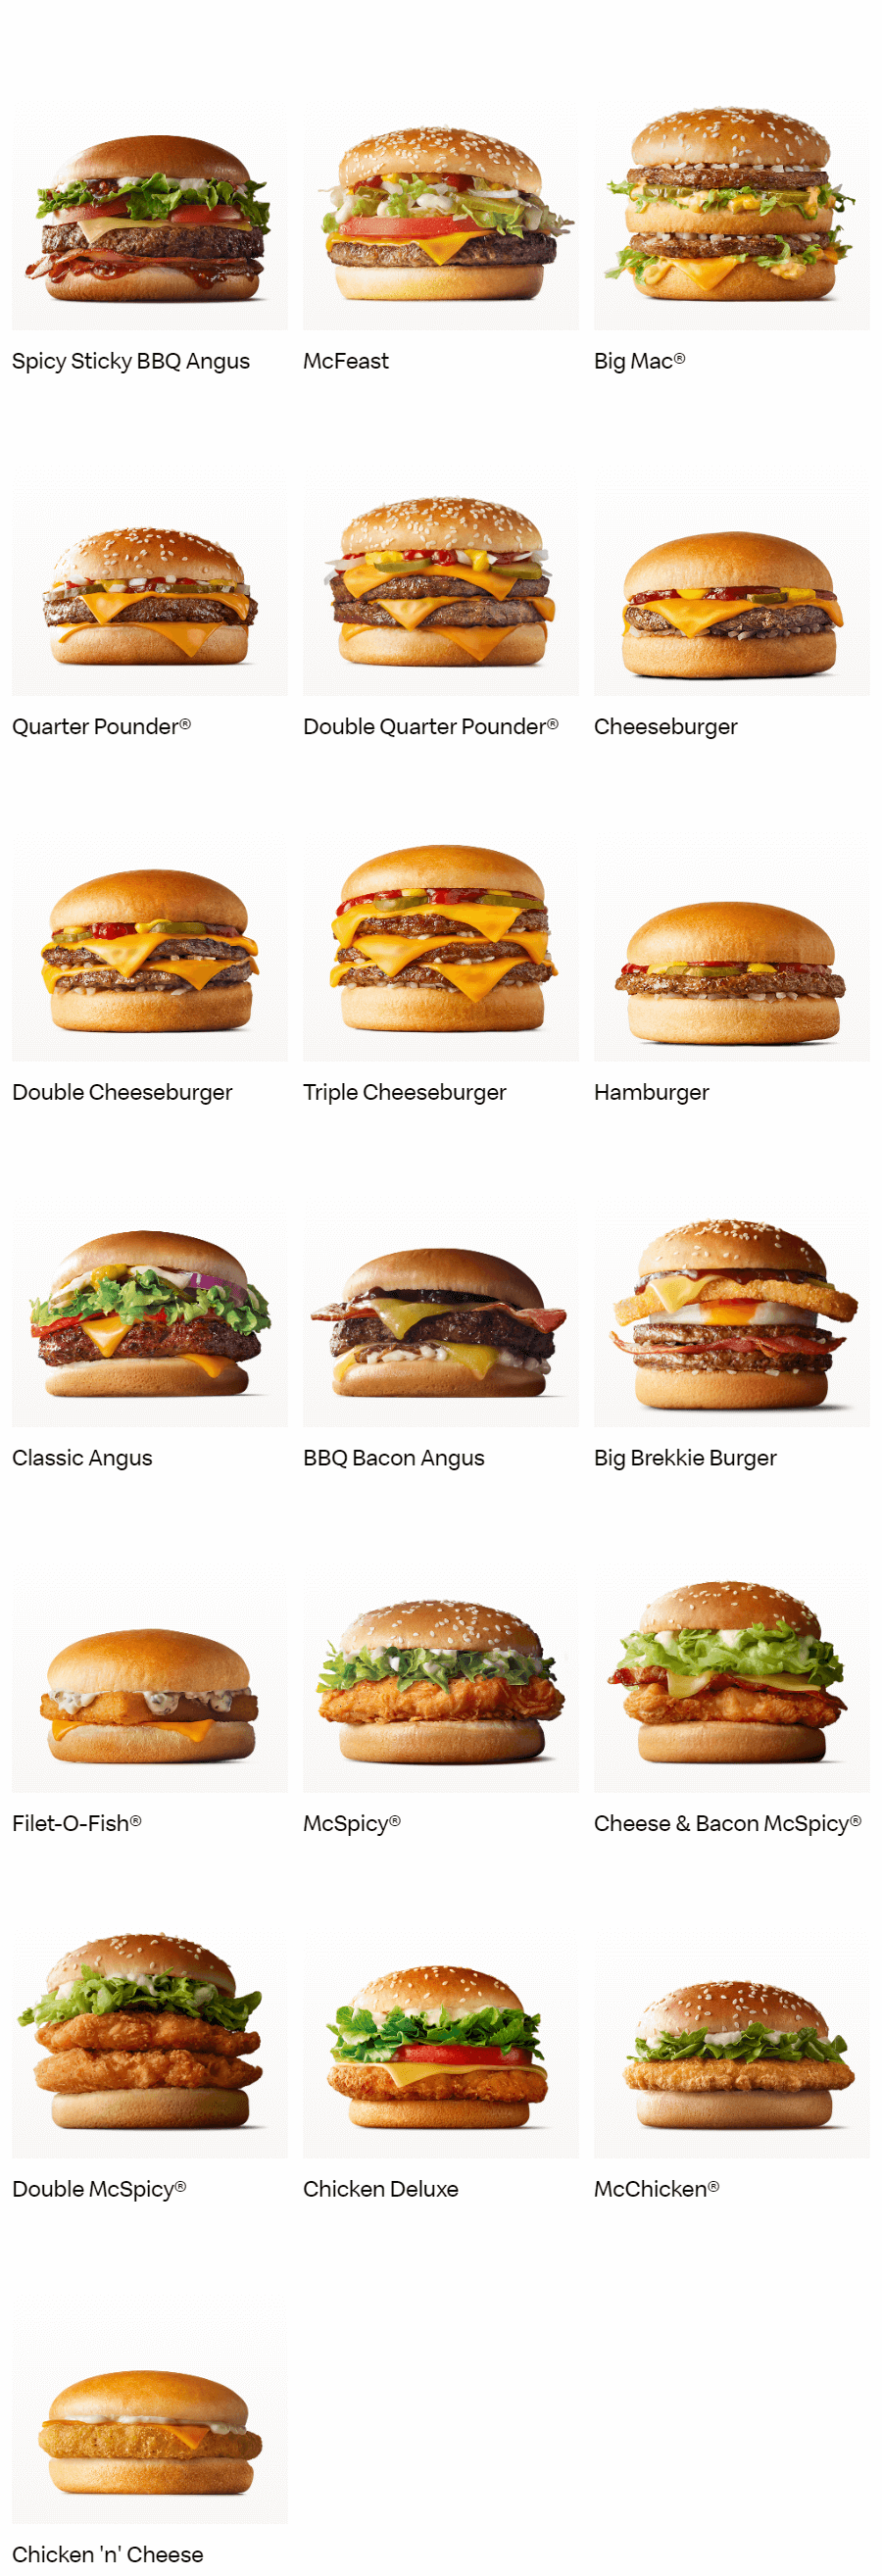 mcdonald's burgers prices